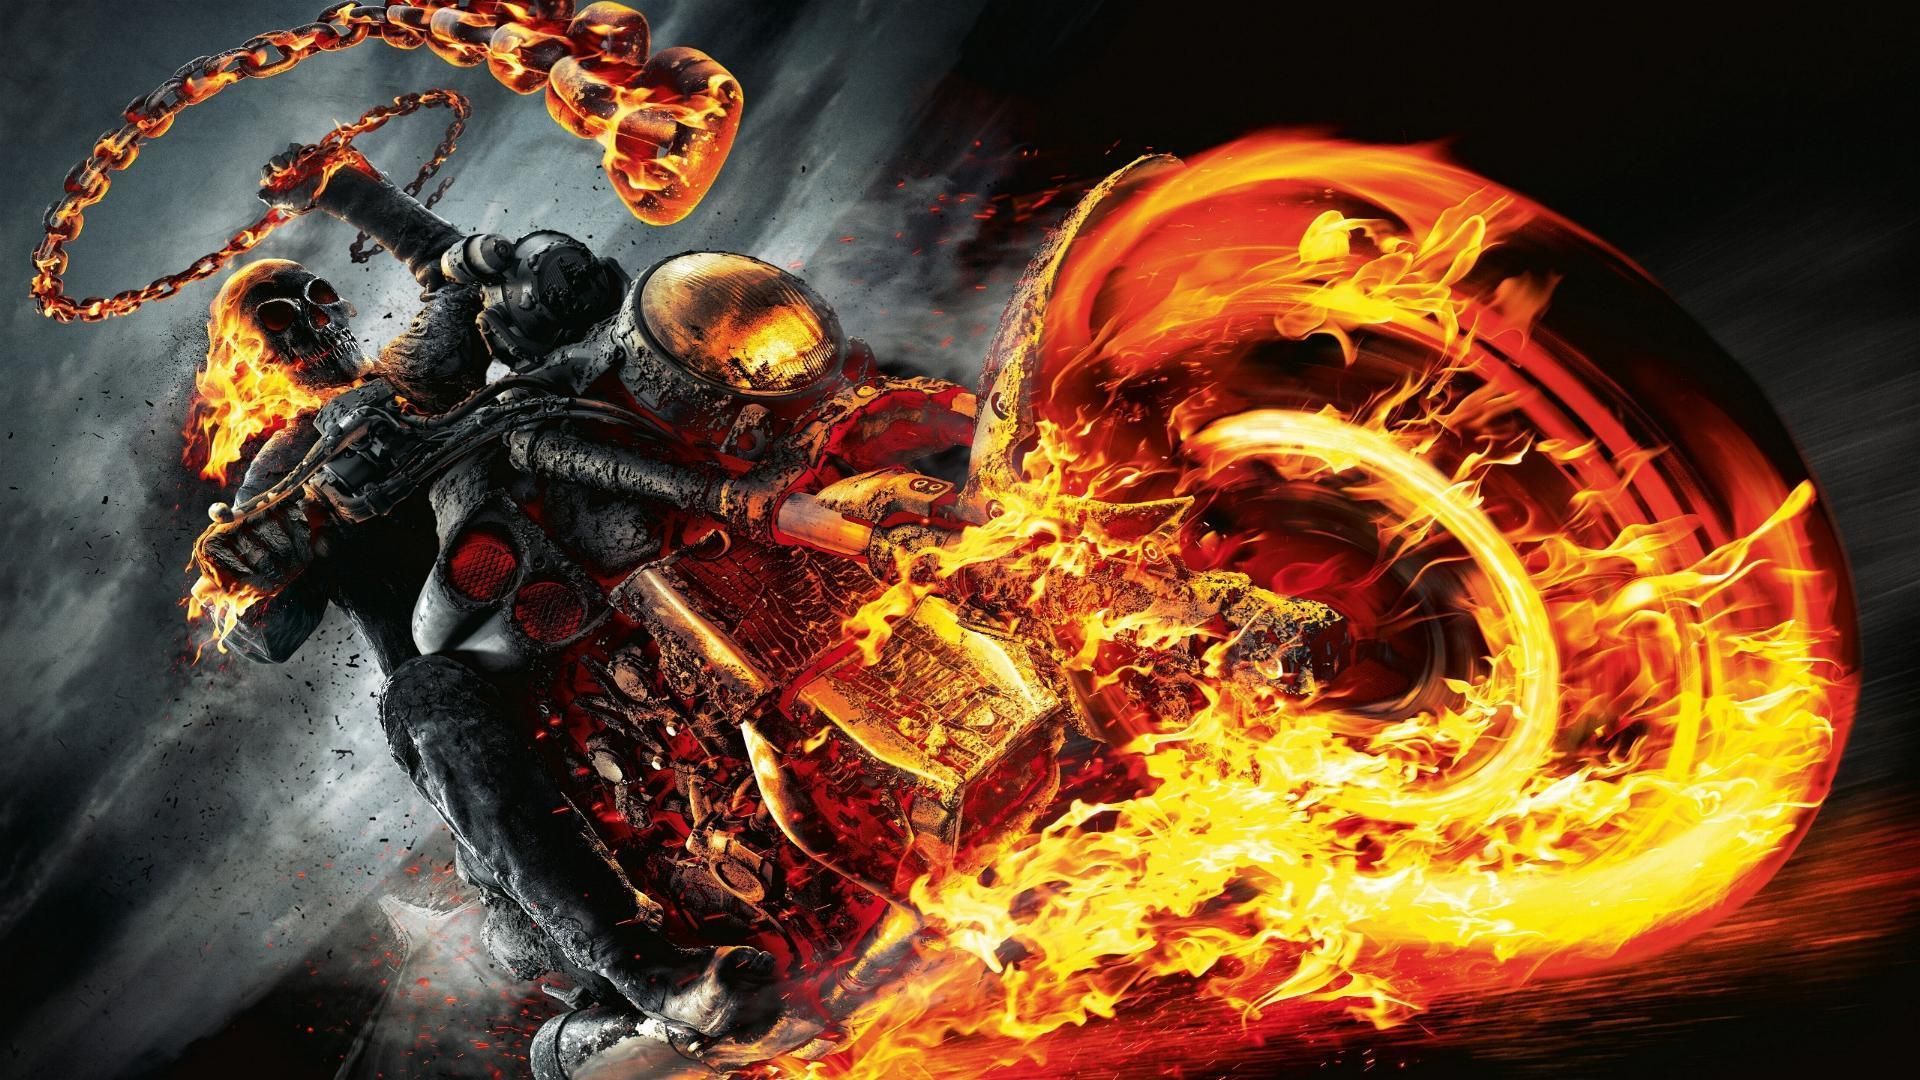 Cubierta de Ghost Rider: Espíritu de venganza